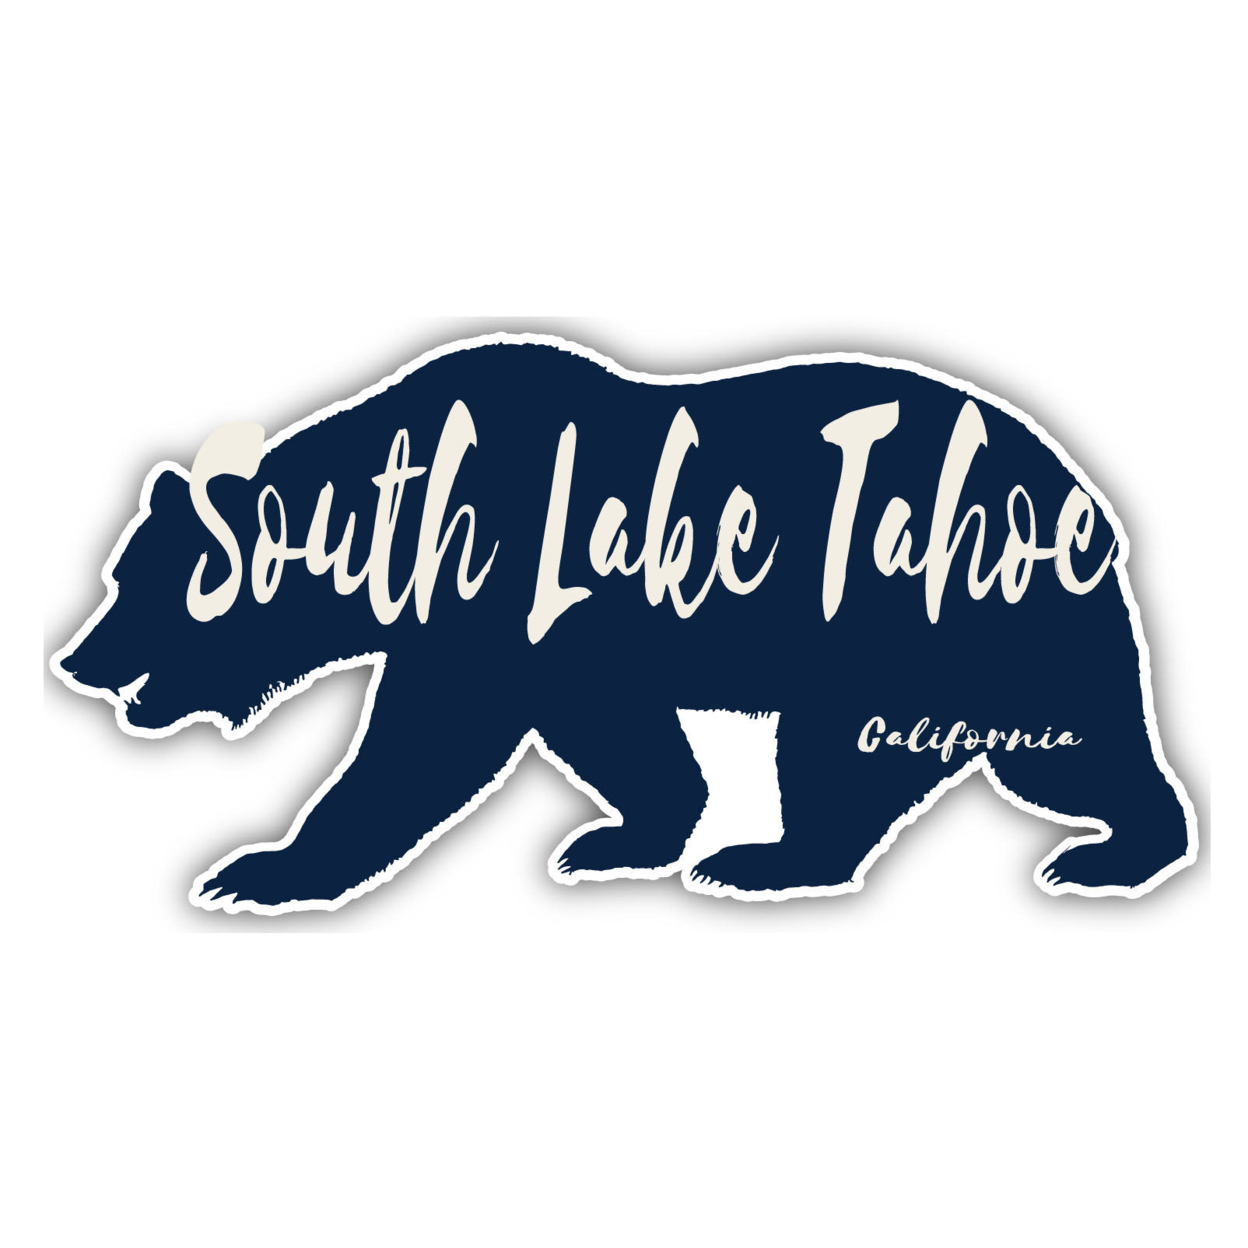 South Lake Tahoe California Souvenir Decorative Stickers (Choose Theme And Size) - Single Unit, 2-Inch, Tent